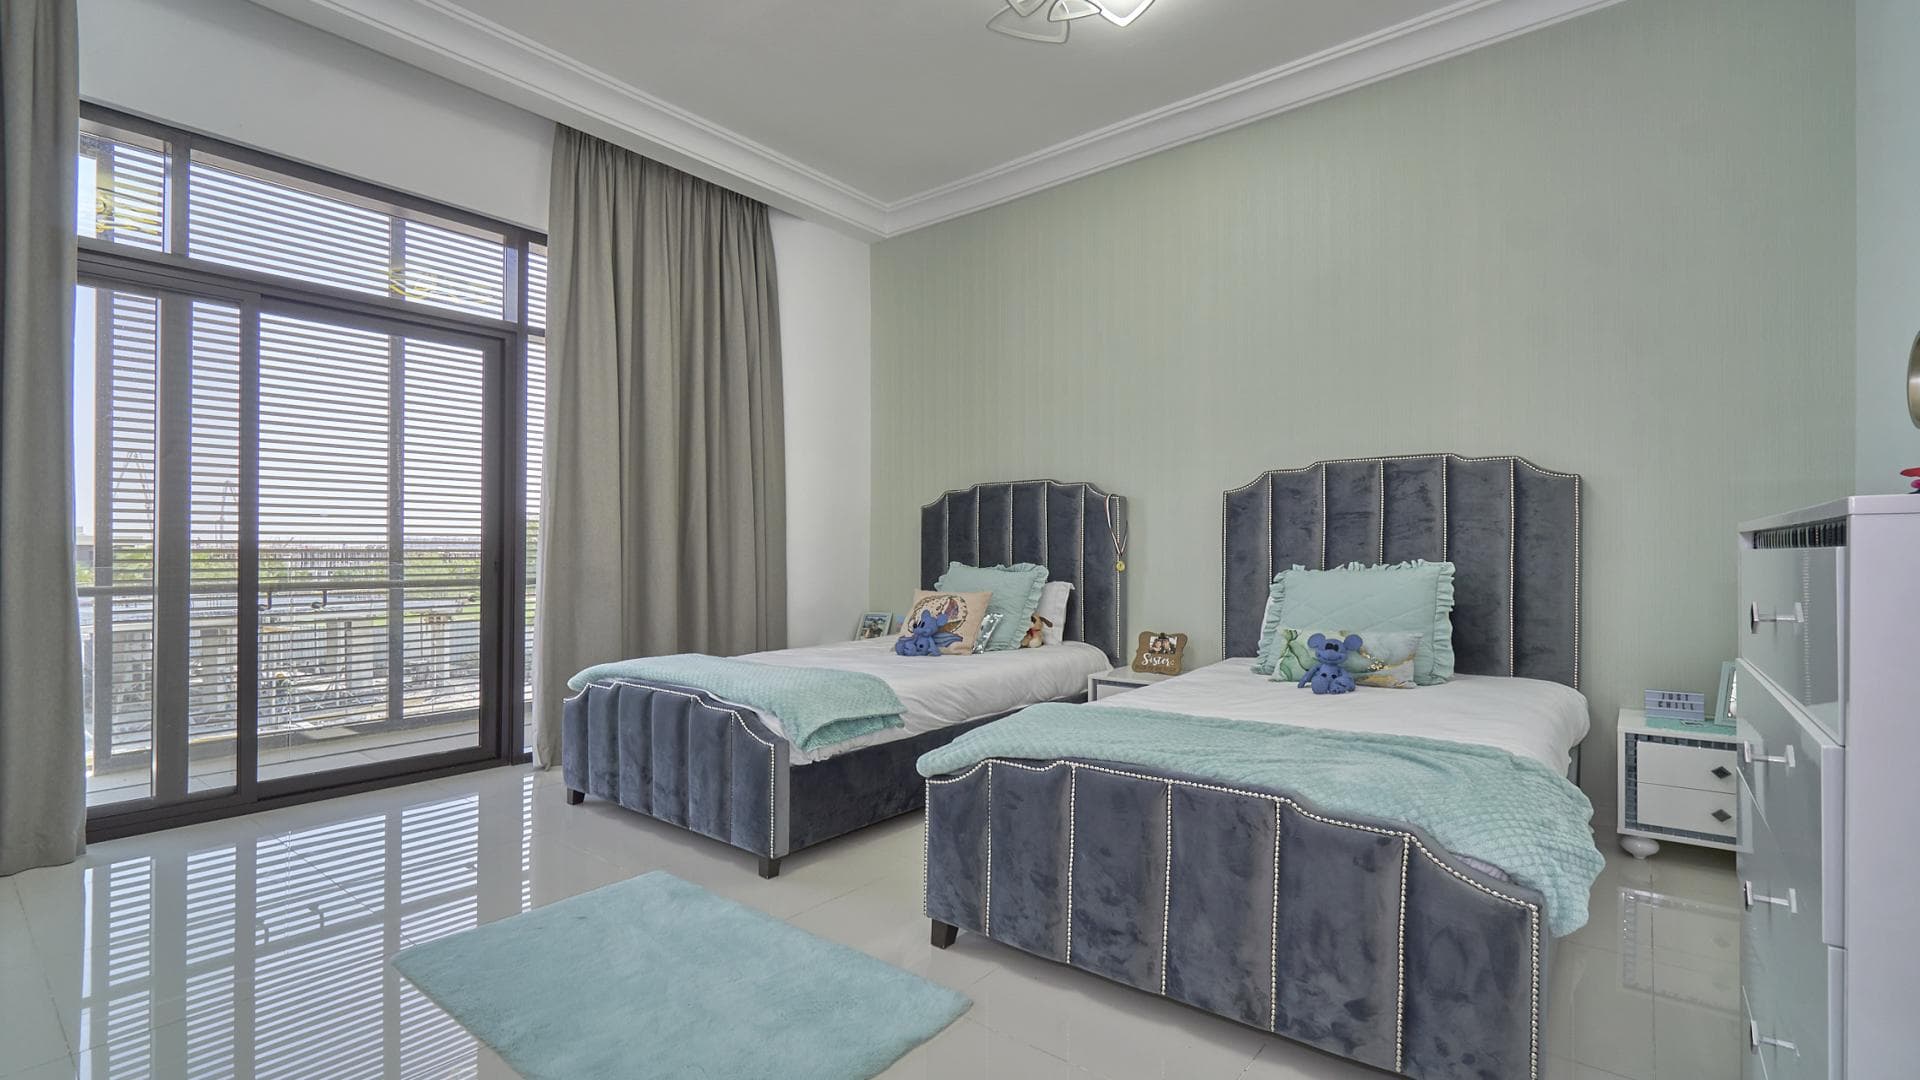 5 Bedroom Villa For Rent Rose 1 Lp35480 22f176b9858d5c00.jpg